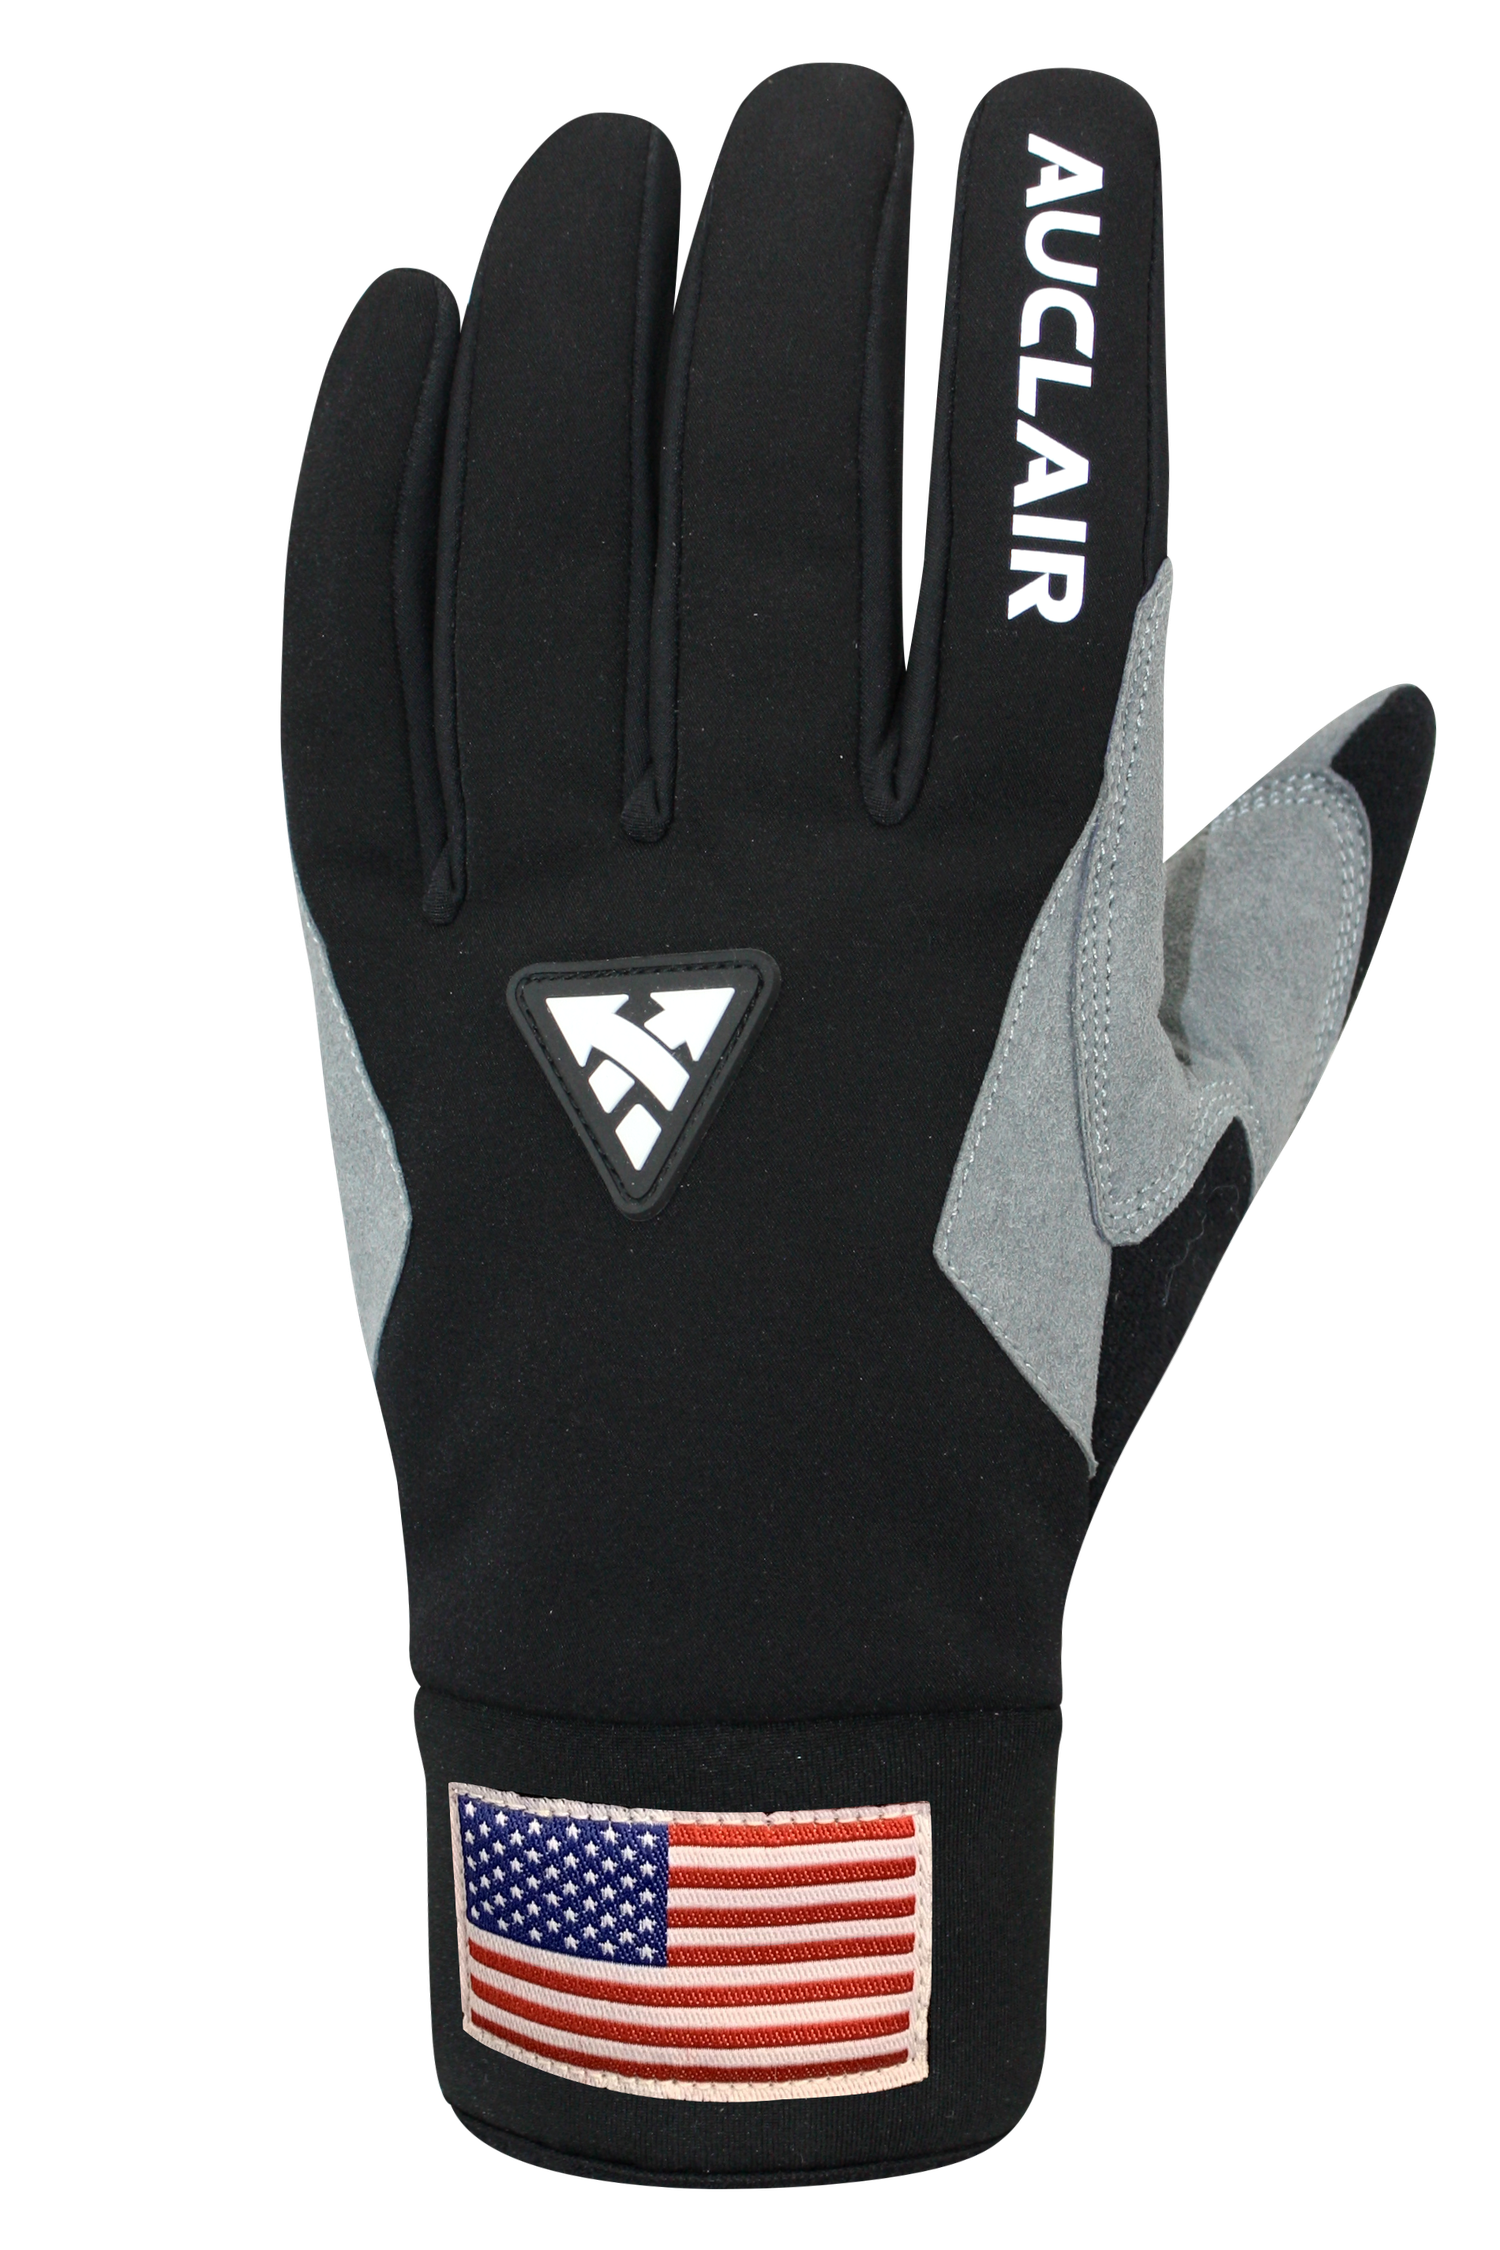 Stellar USA Gloves - Adult, Black/Grey